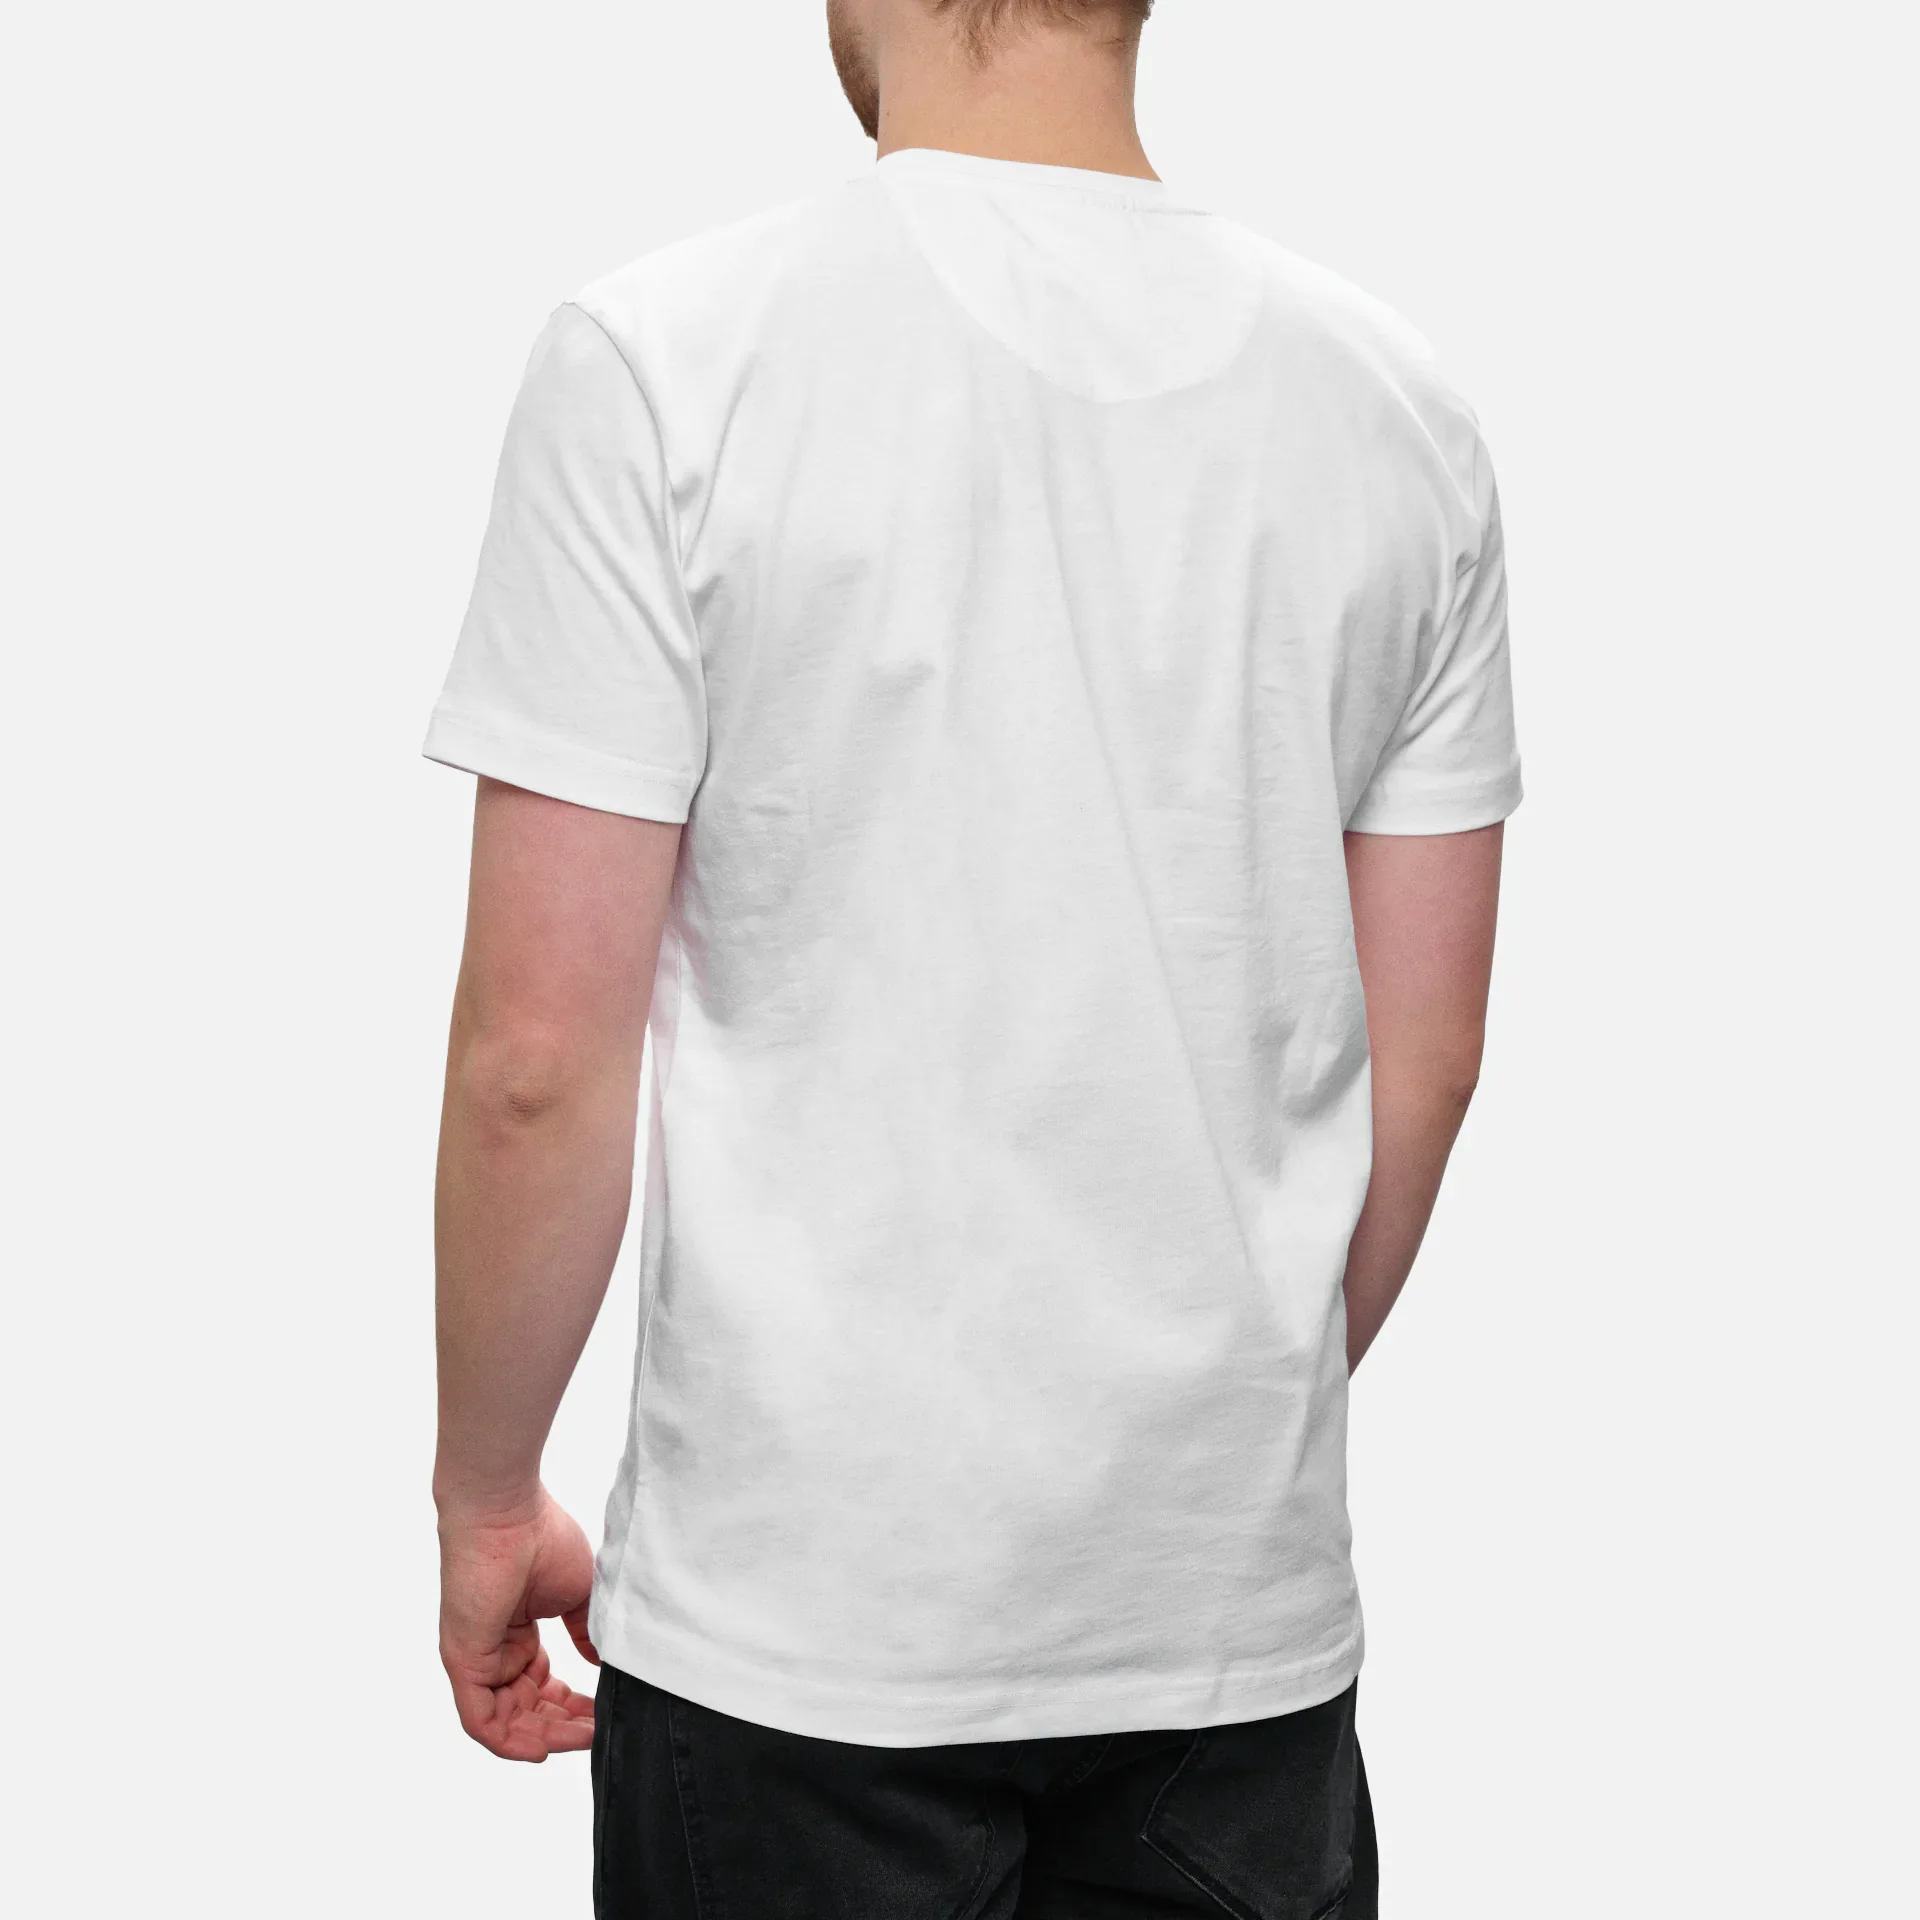 Carlo Colucci Black & White Drop T-Shirt White